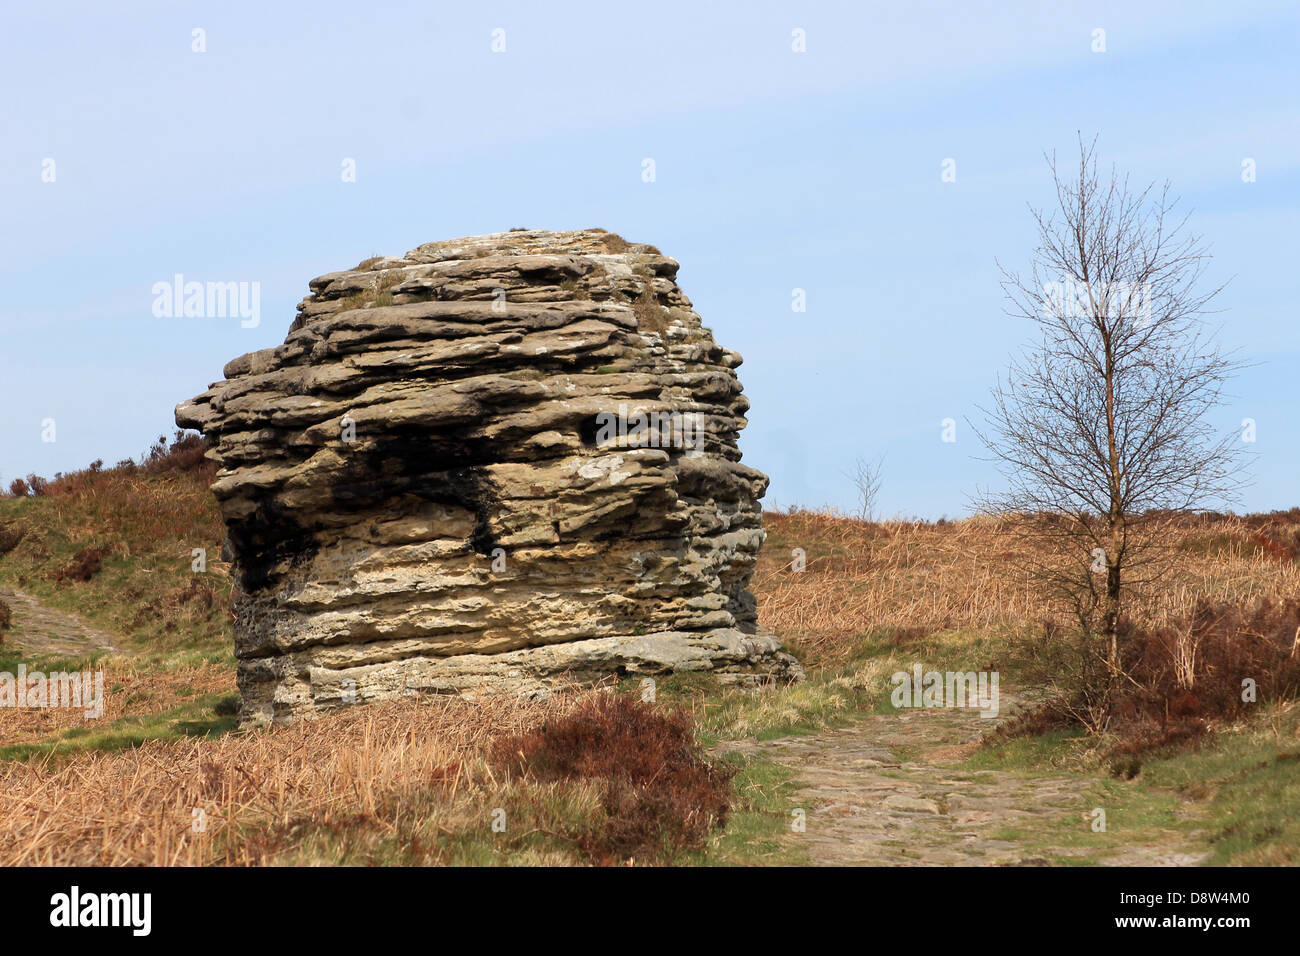 Rock formation dans le North Yorkshire Moors National Park, Angleterre. Banque D'Images